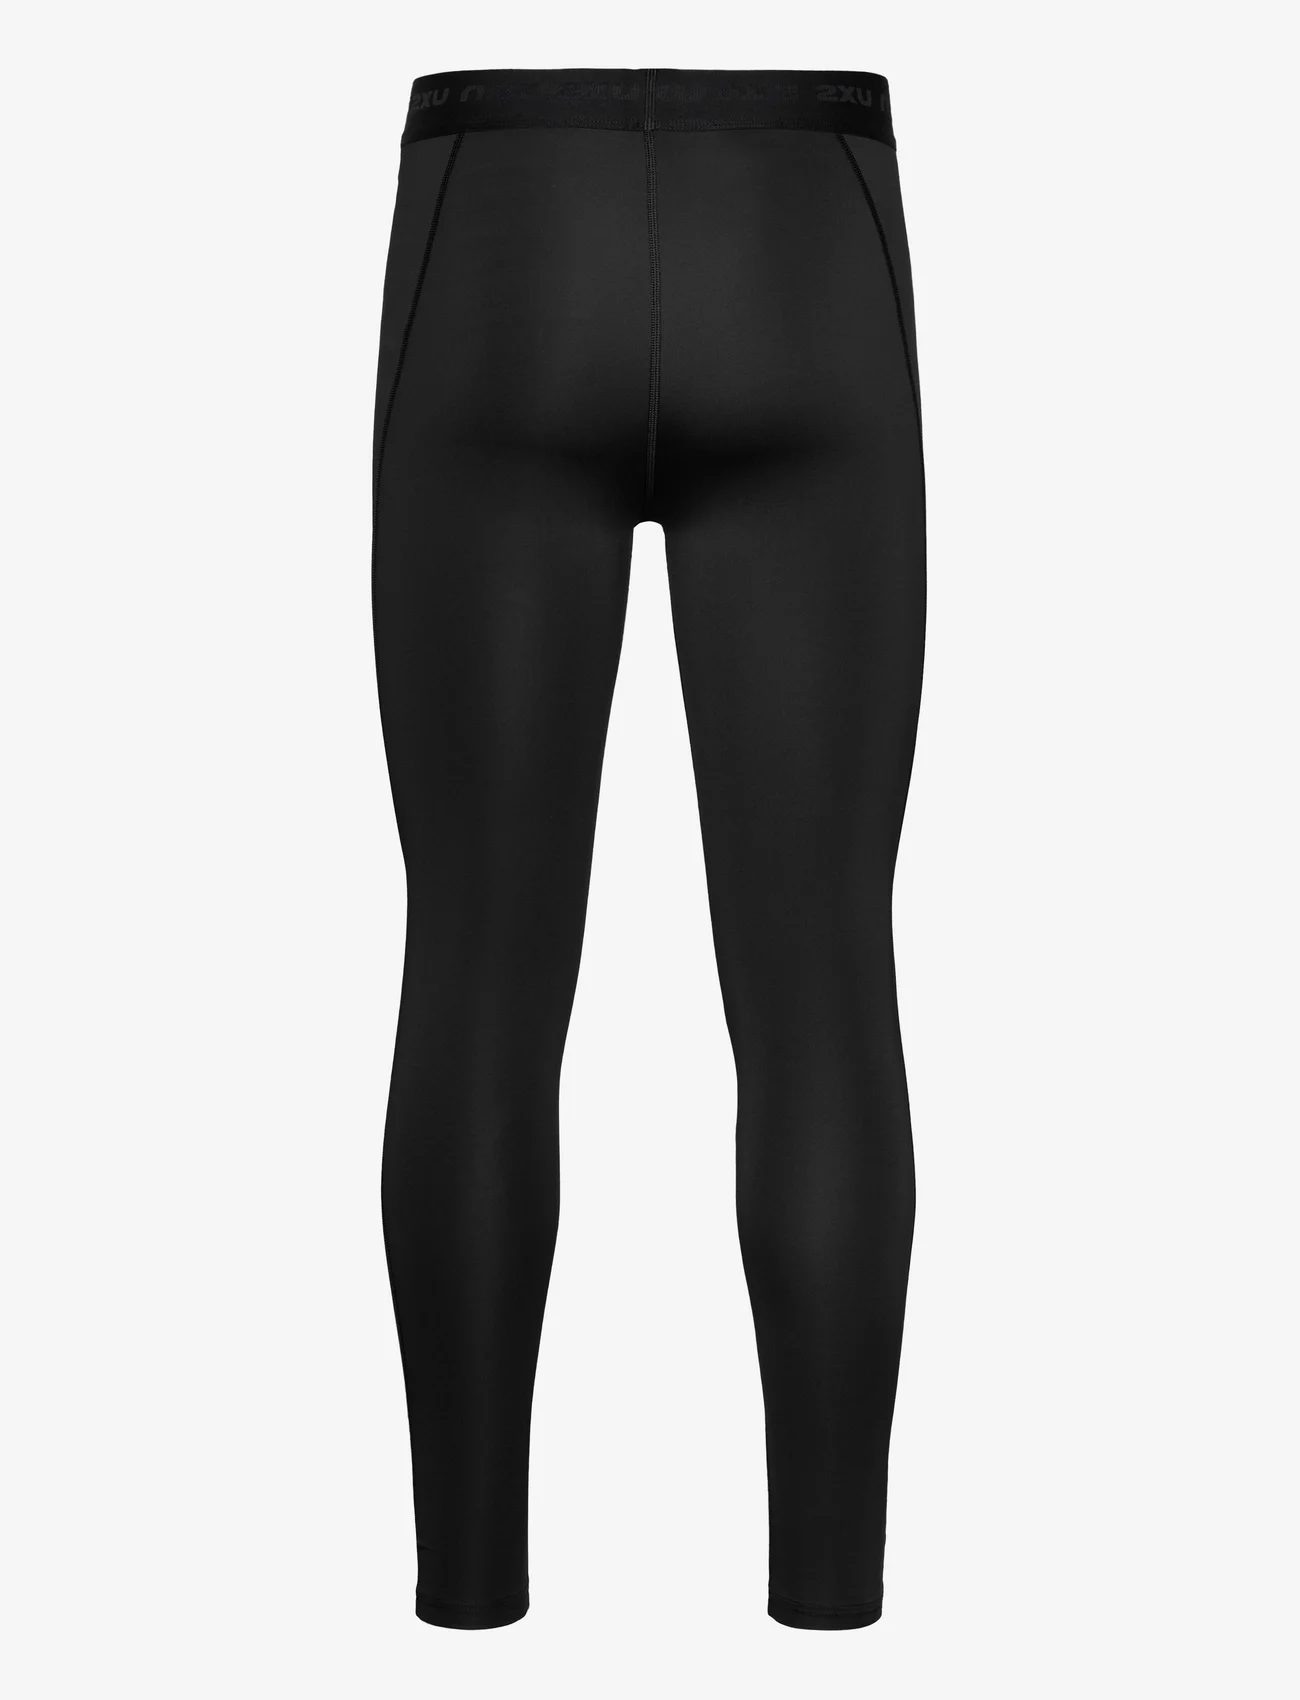 2XU - BASE LAYER COMPRESSION TIGHTS - aluskihina kantavad püksid - black/nero - 1